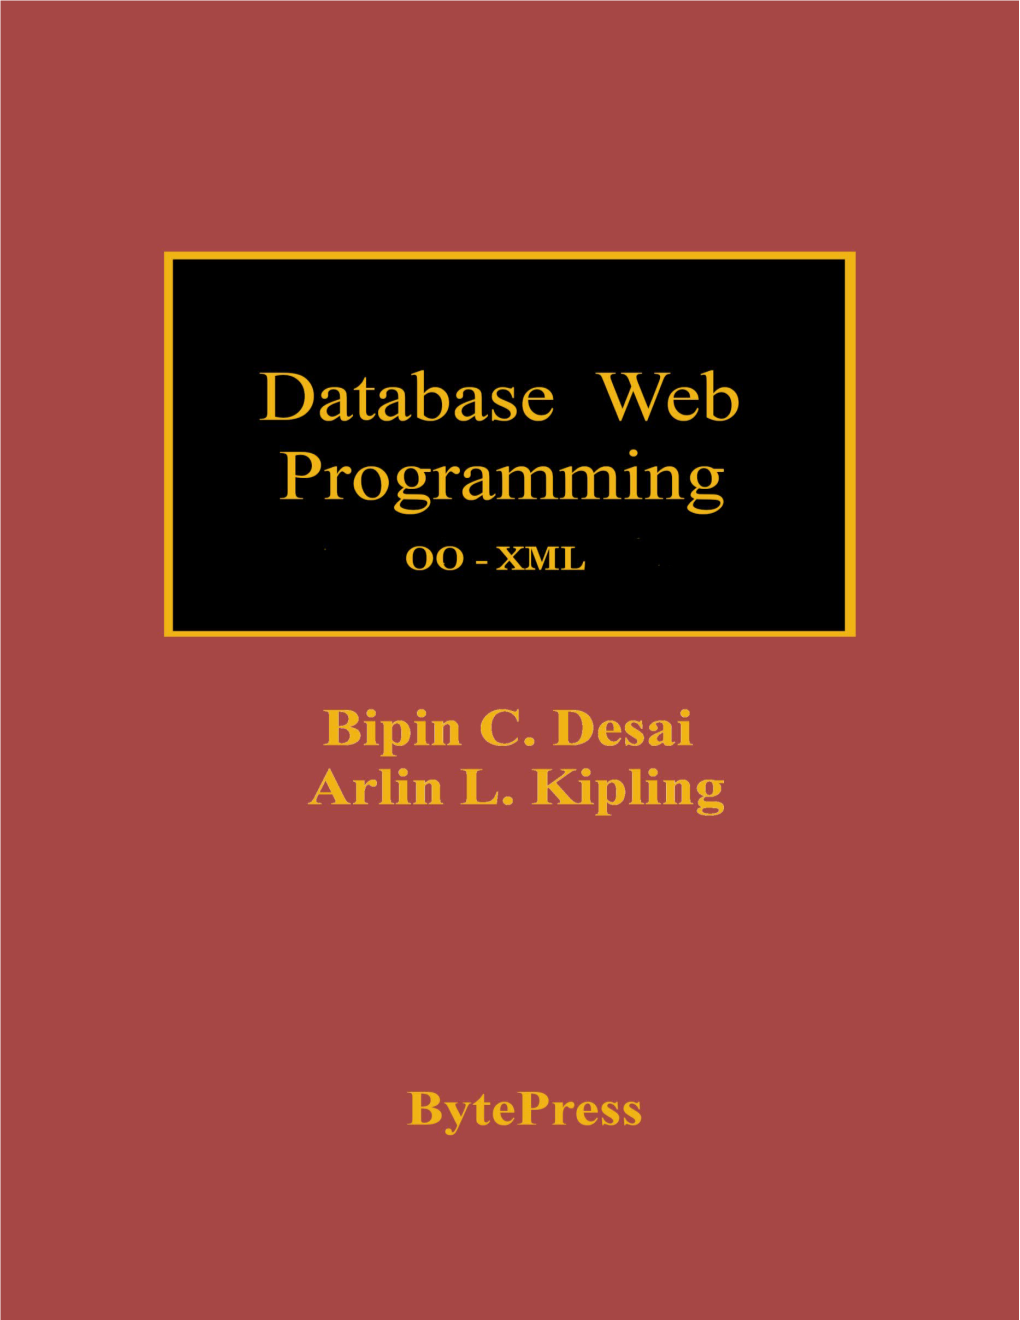 Database Web Programming Open Office Version